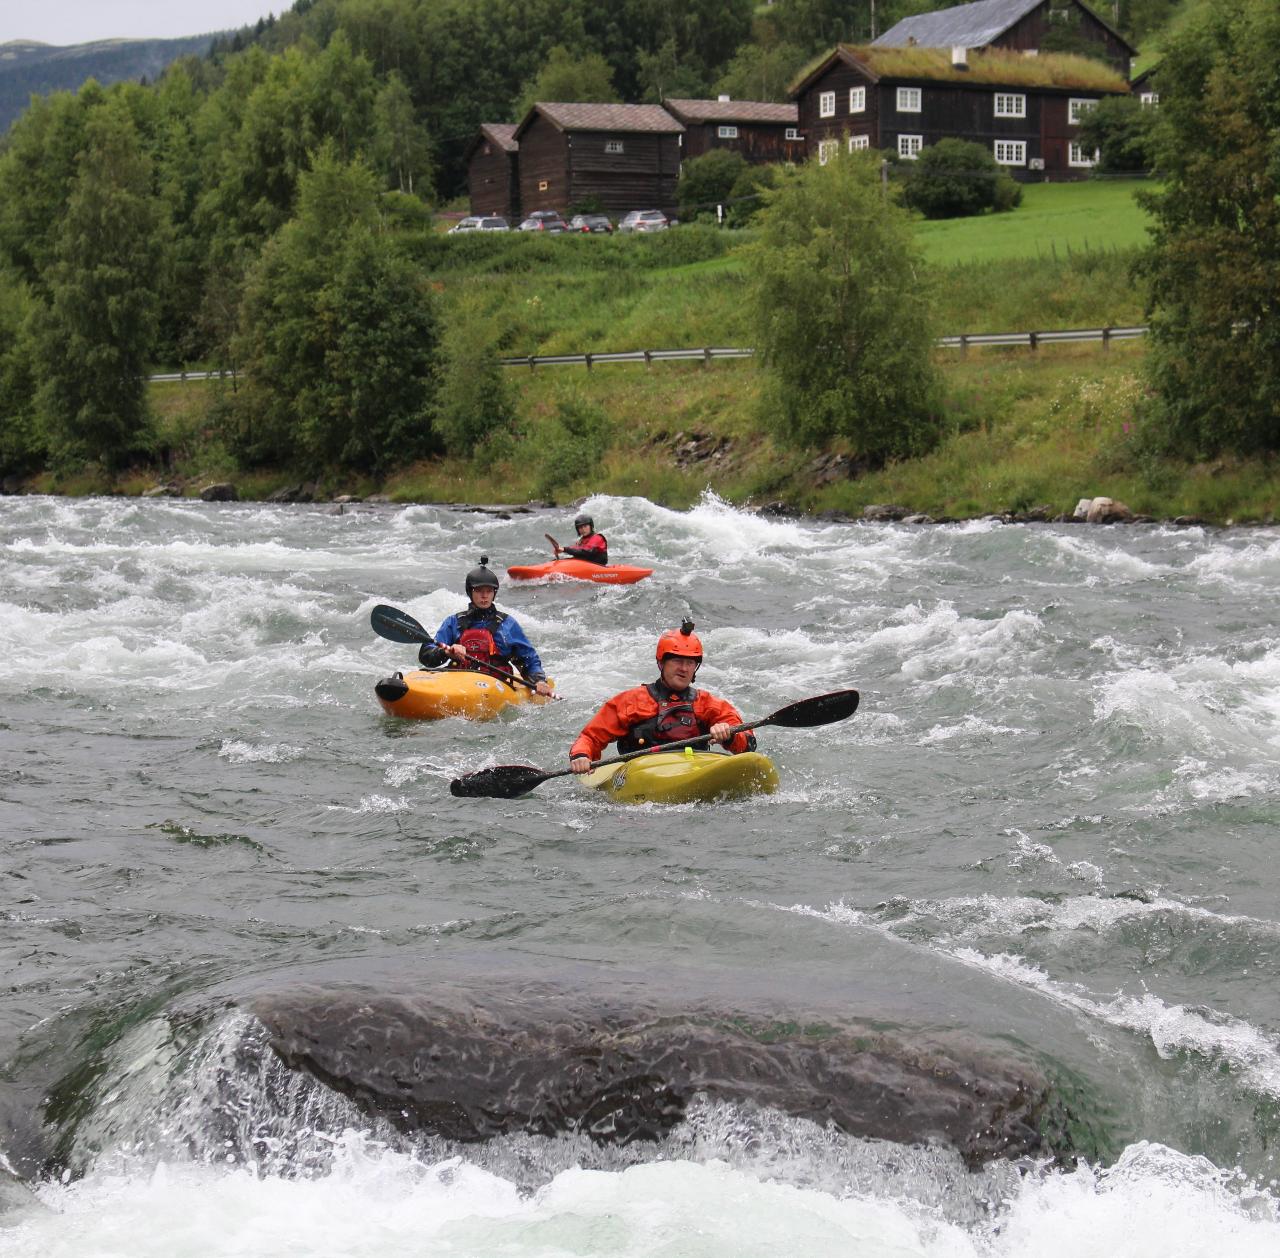 Grade 3 Guided Whitewater Kayak or Packraft Tour - Sjoa, Norway